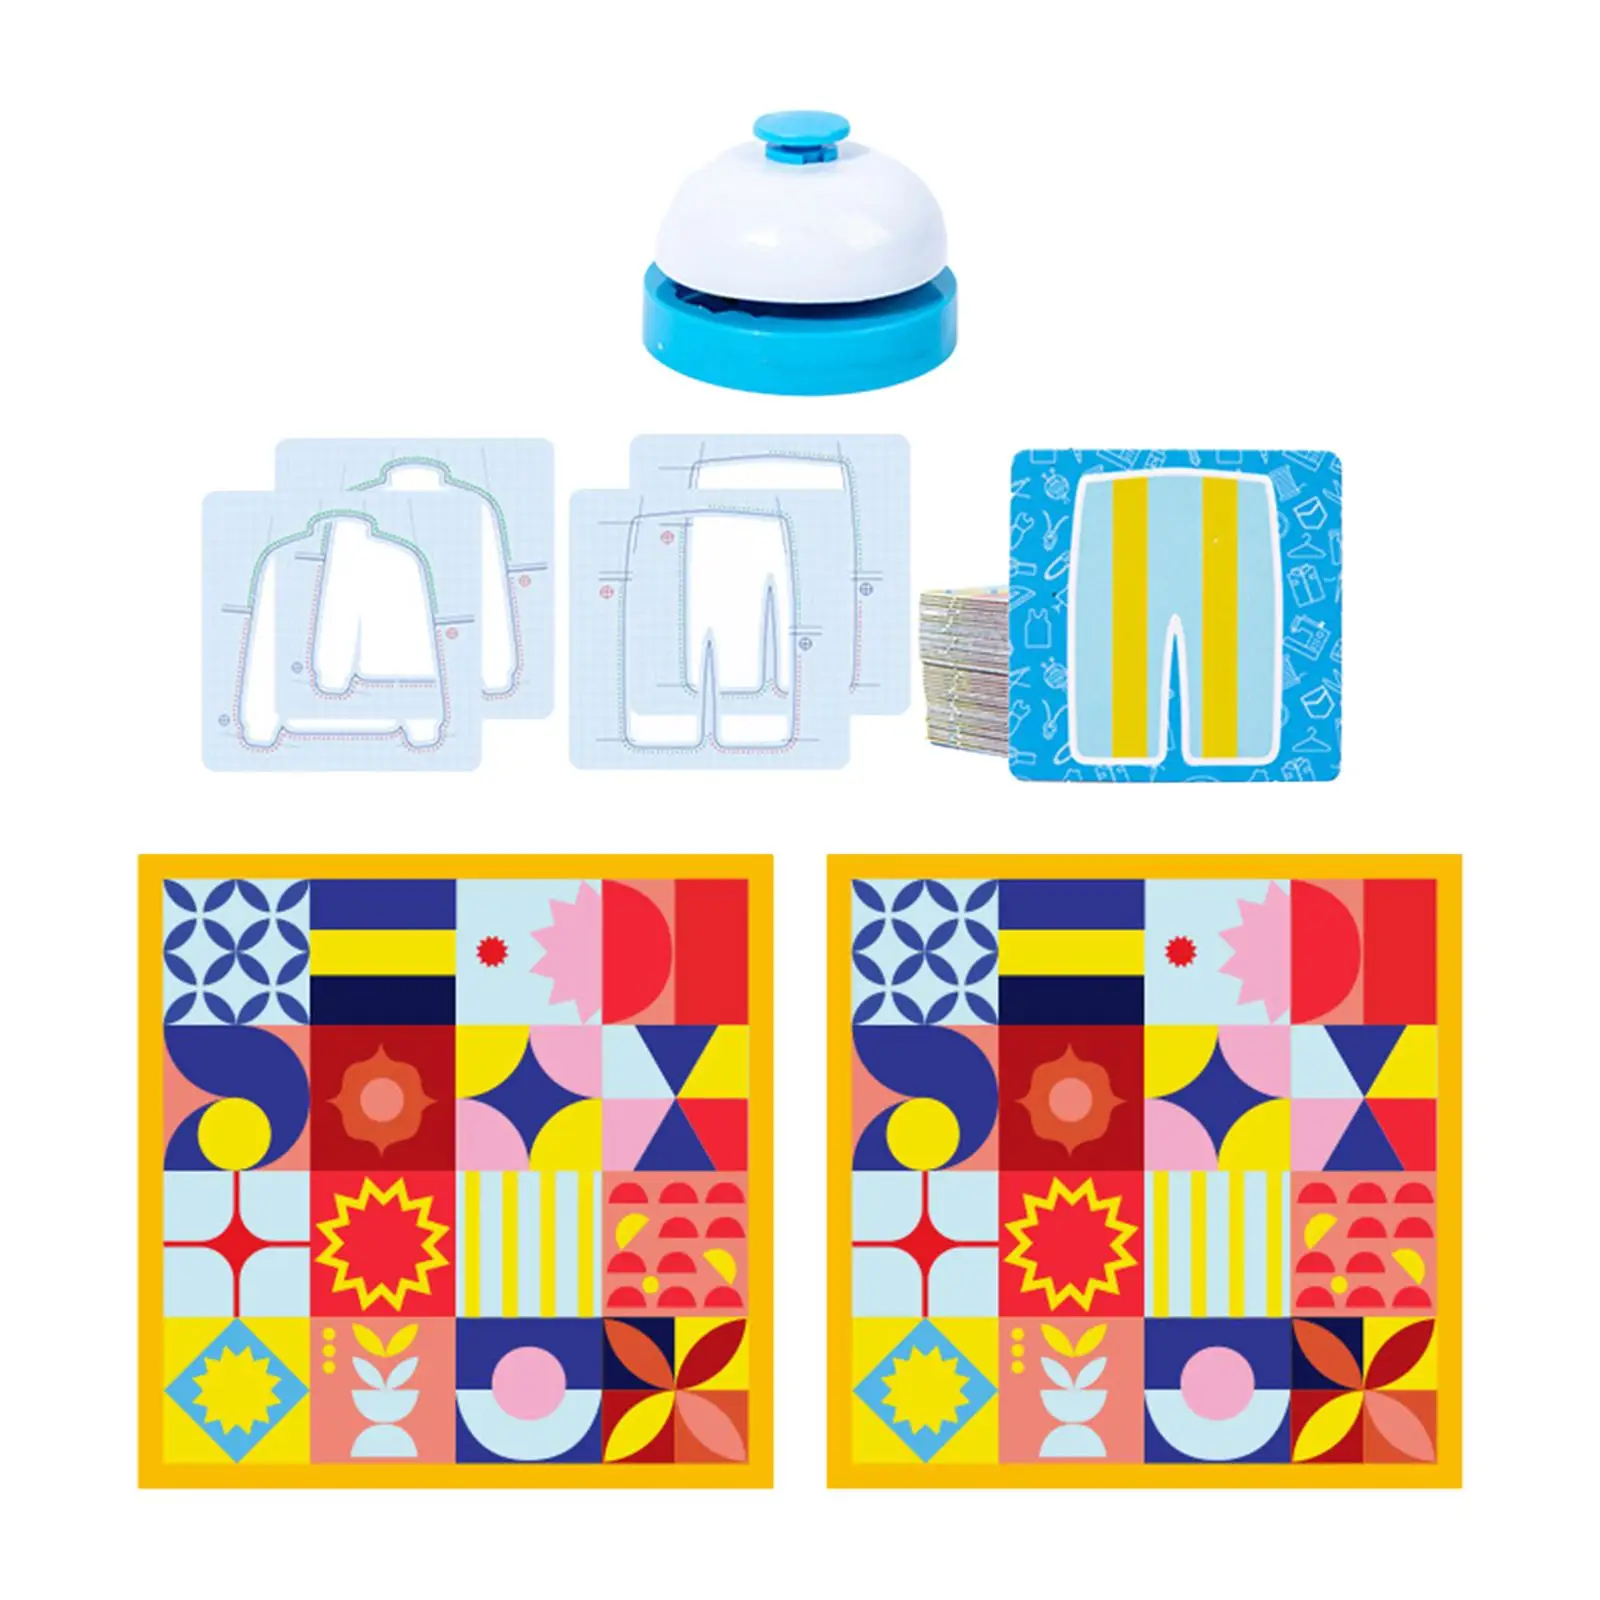 Shape Matching Puzzle Busy Board Montessori Hand Eye Coordibation Development Toy Tailor for Preschool Kids Birthday Gift